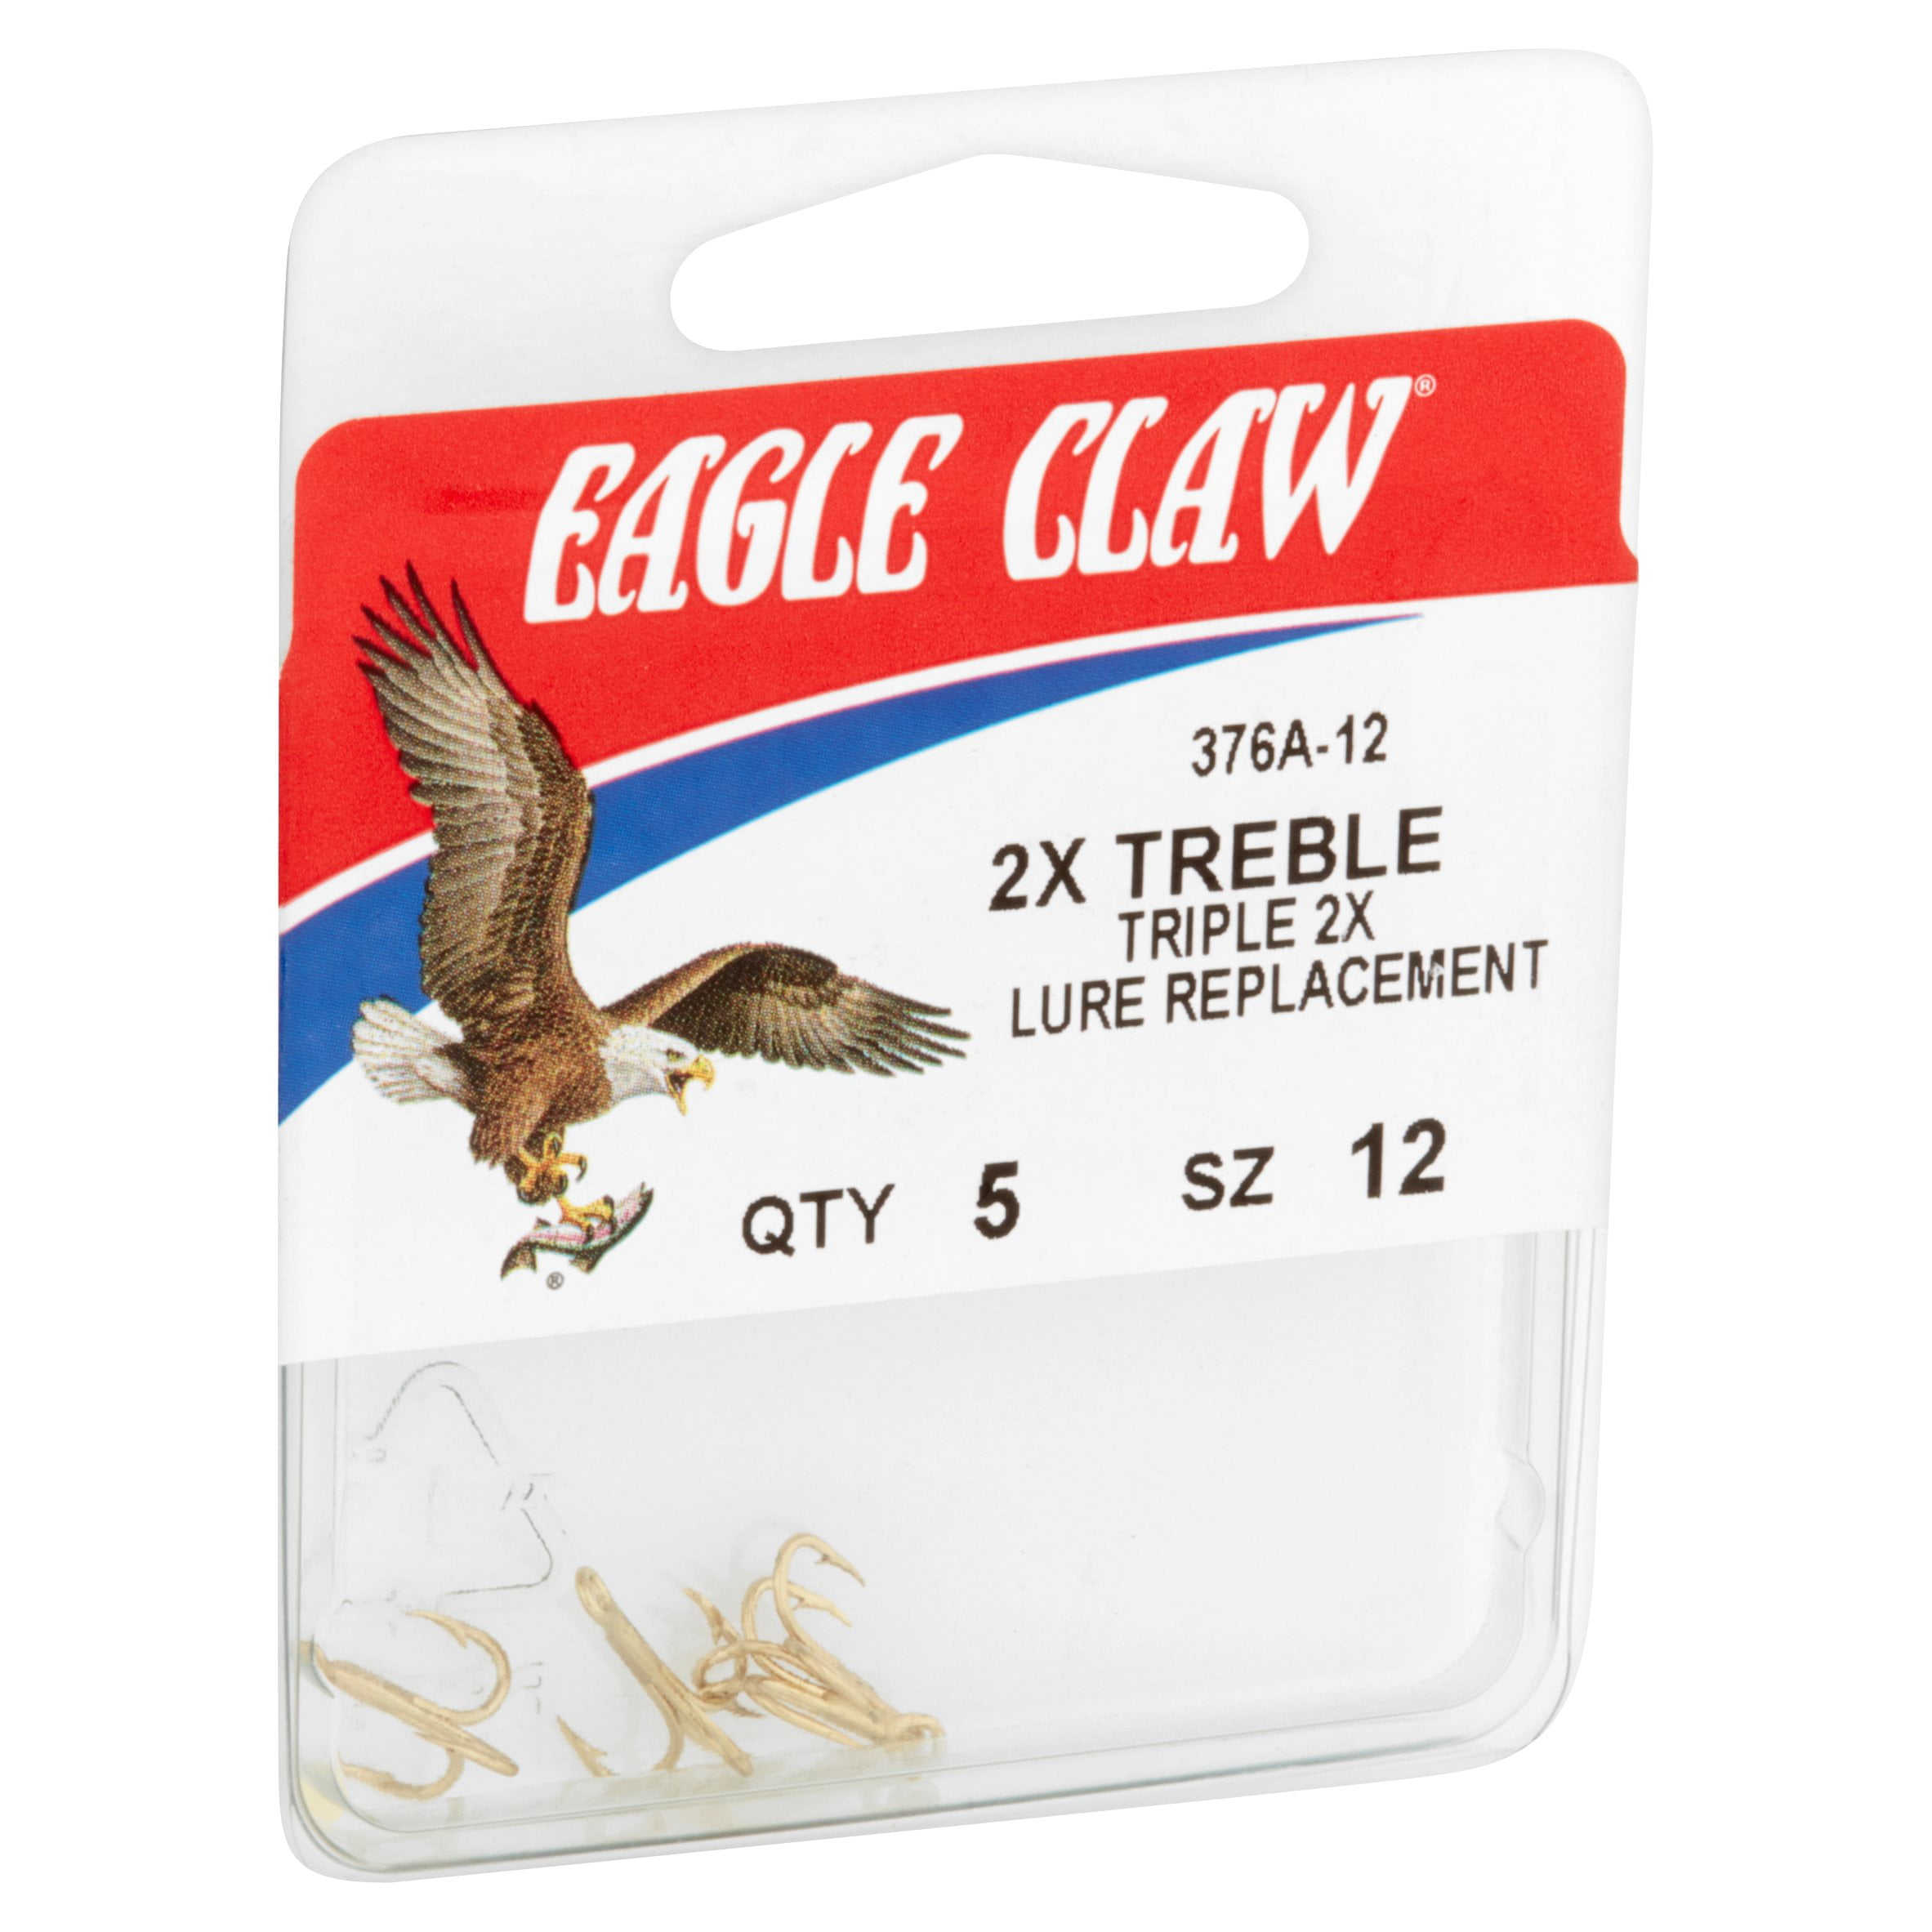 Super Eagle claw 375 treble hooks